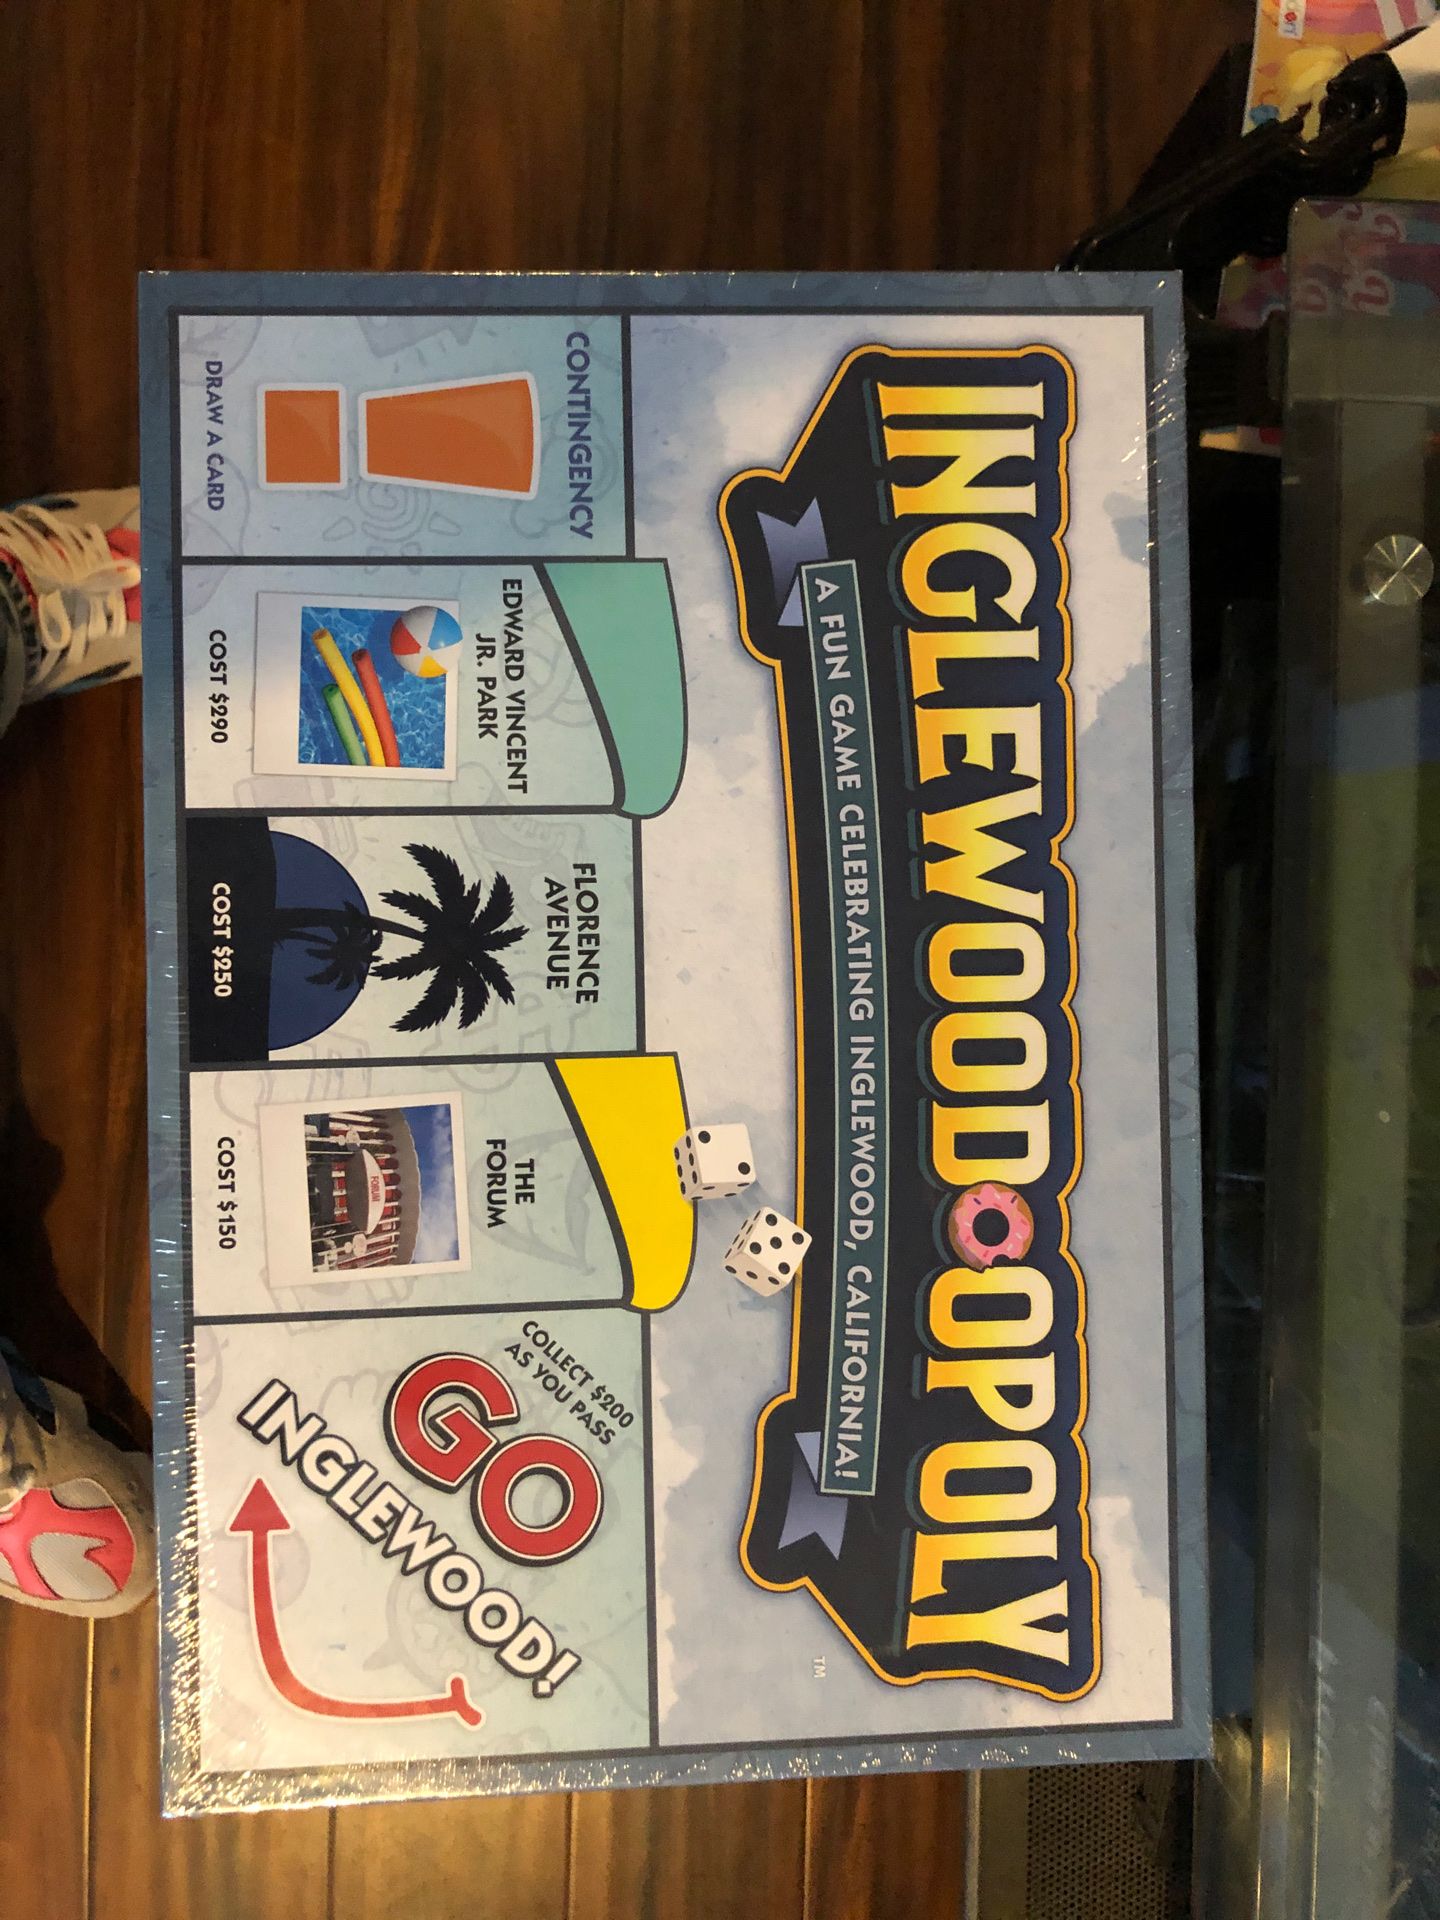 Inglewoodopoly board game